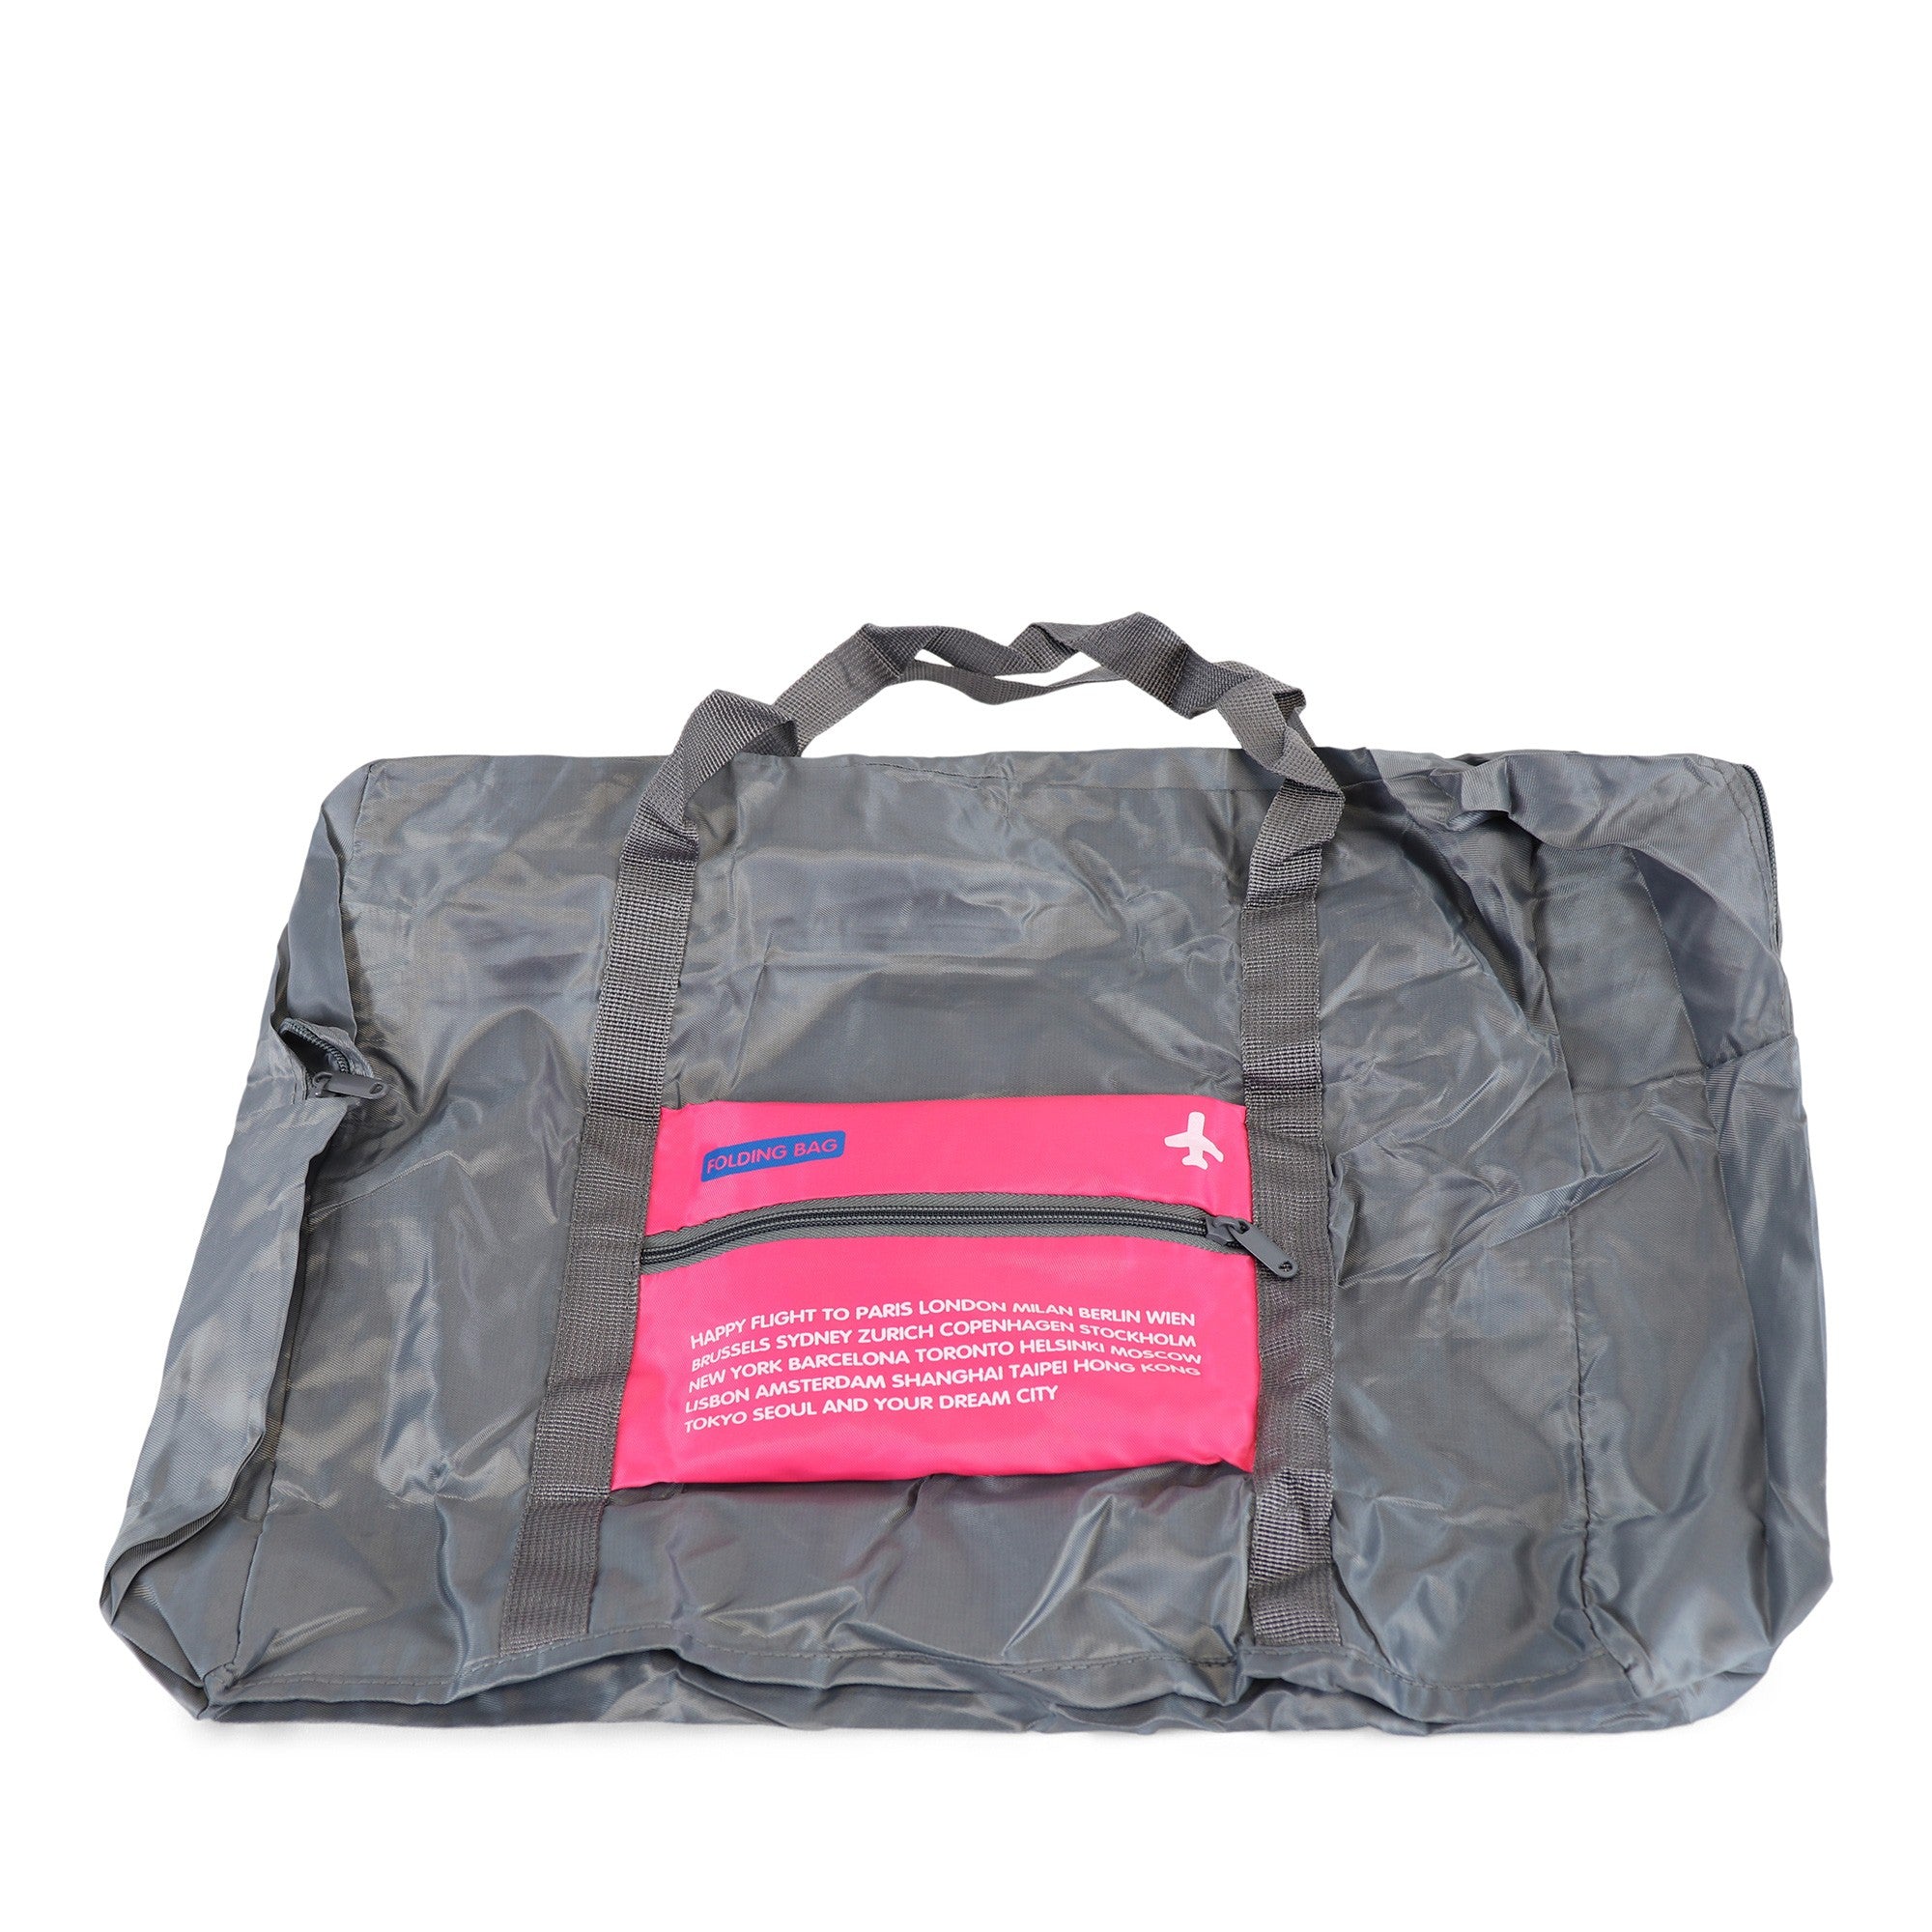 17" Lightweight Foldable Wholesale Tote Bags in Fuschia - Bulk Case of 24 - 4402-FUSCHIA-24